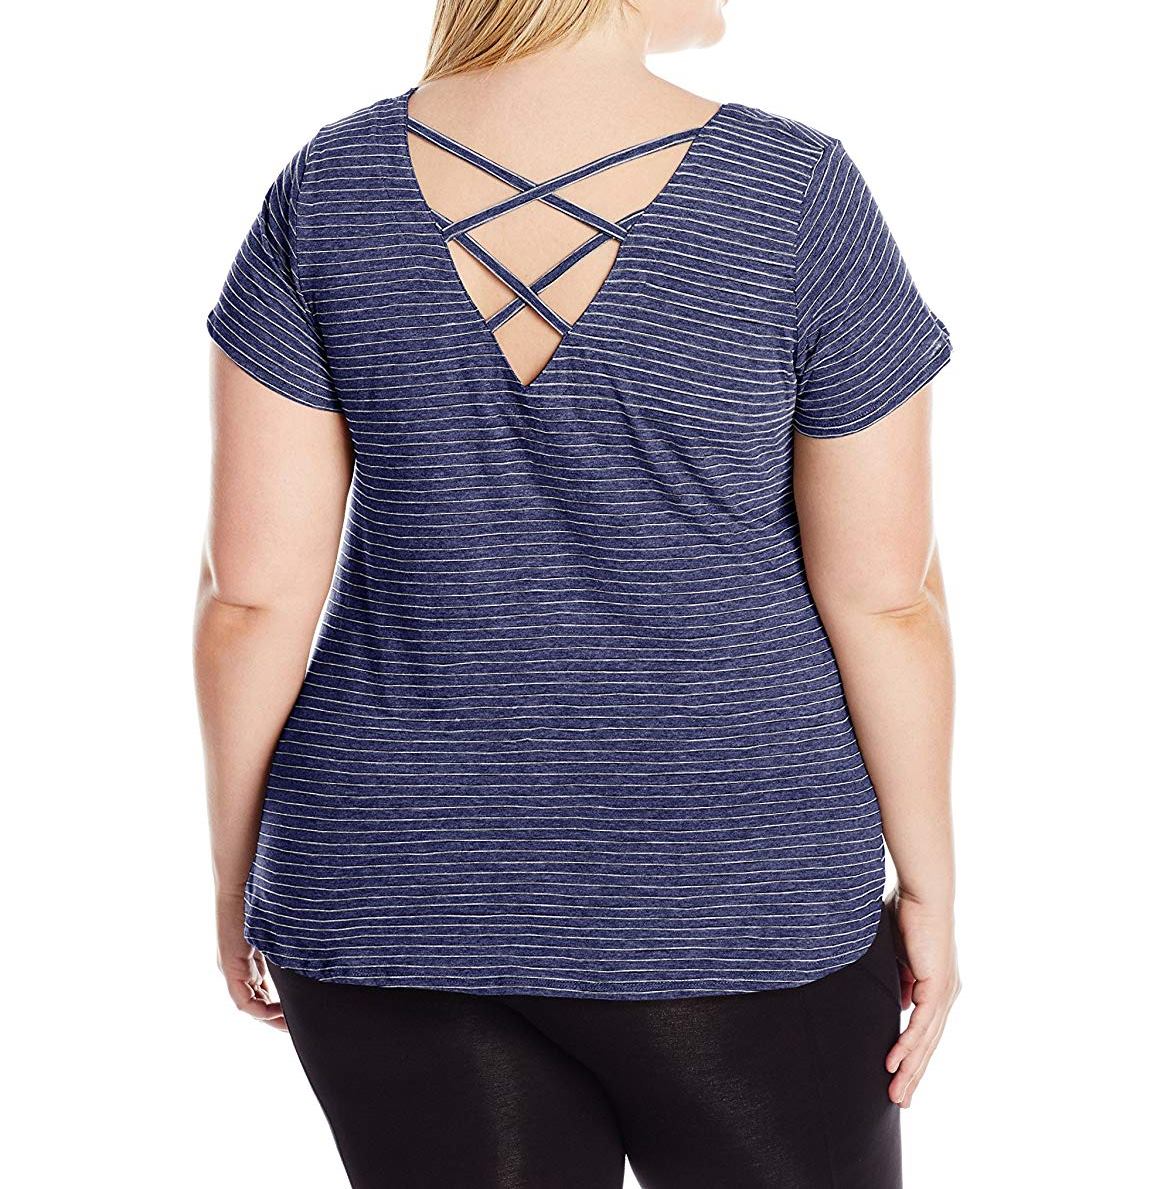 Calvin Klein Womens Performance Plus Size Slub Stripe Cris Cross T-Shirt